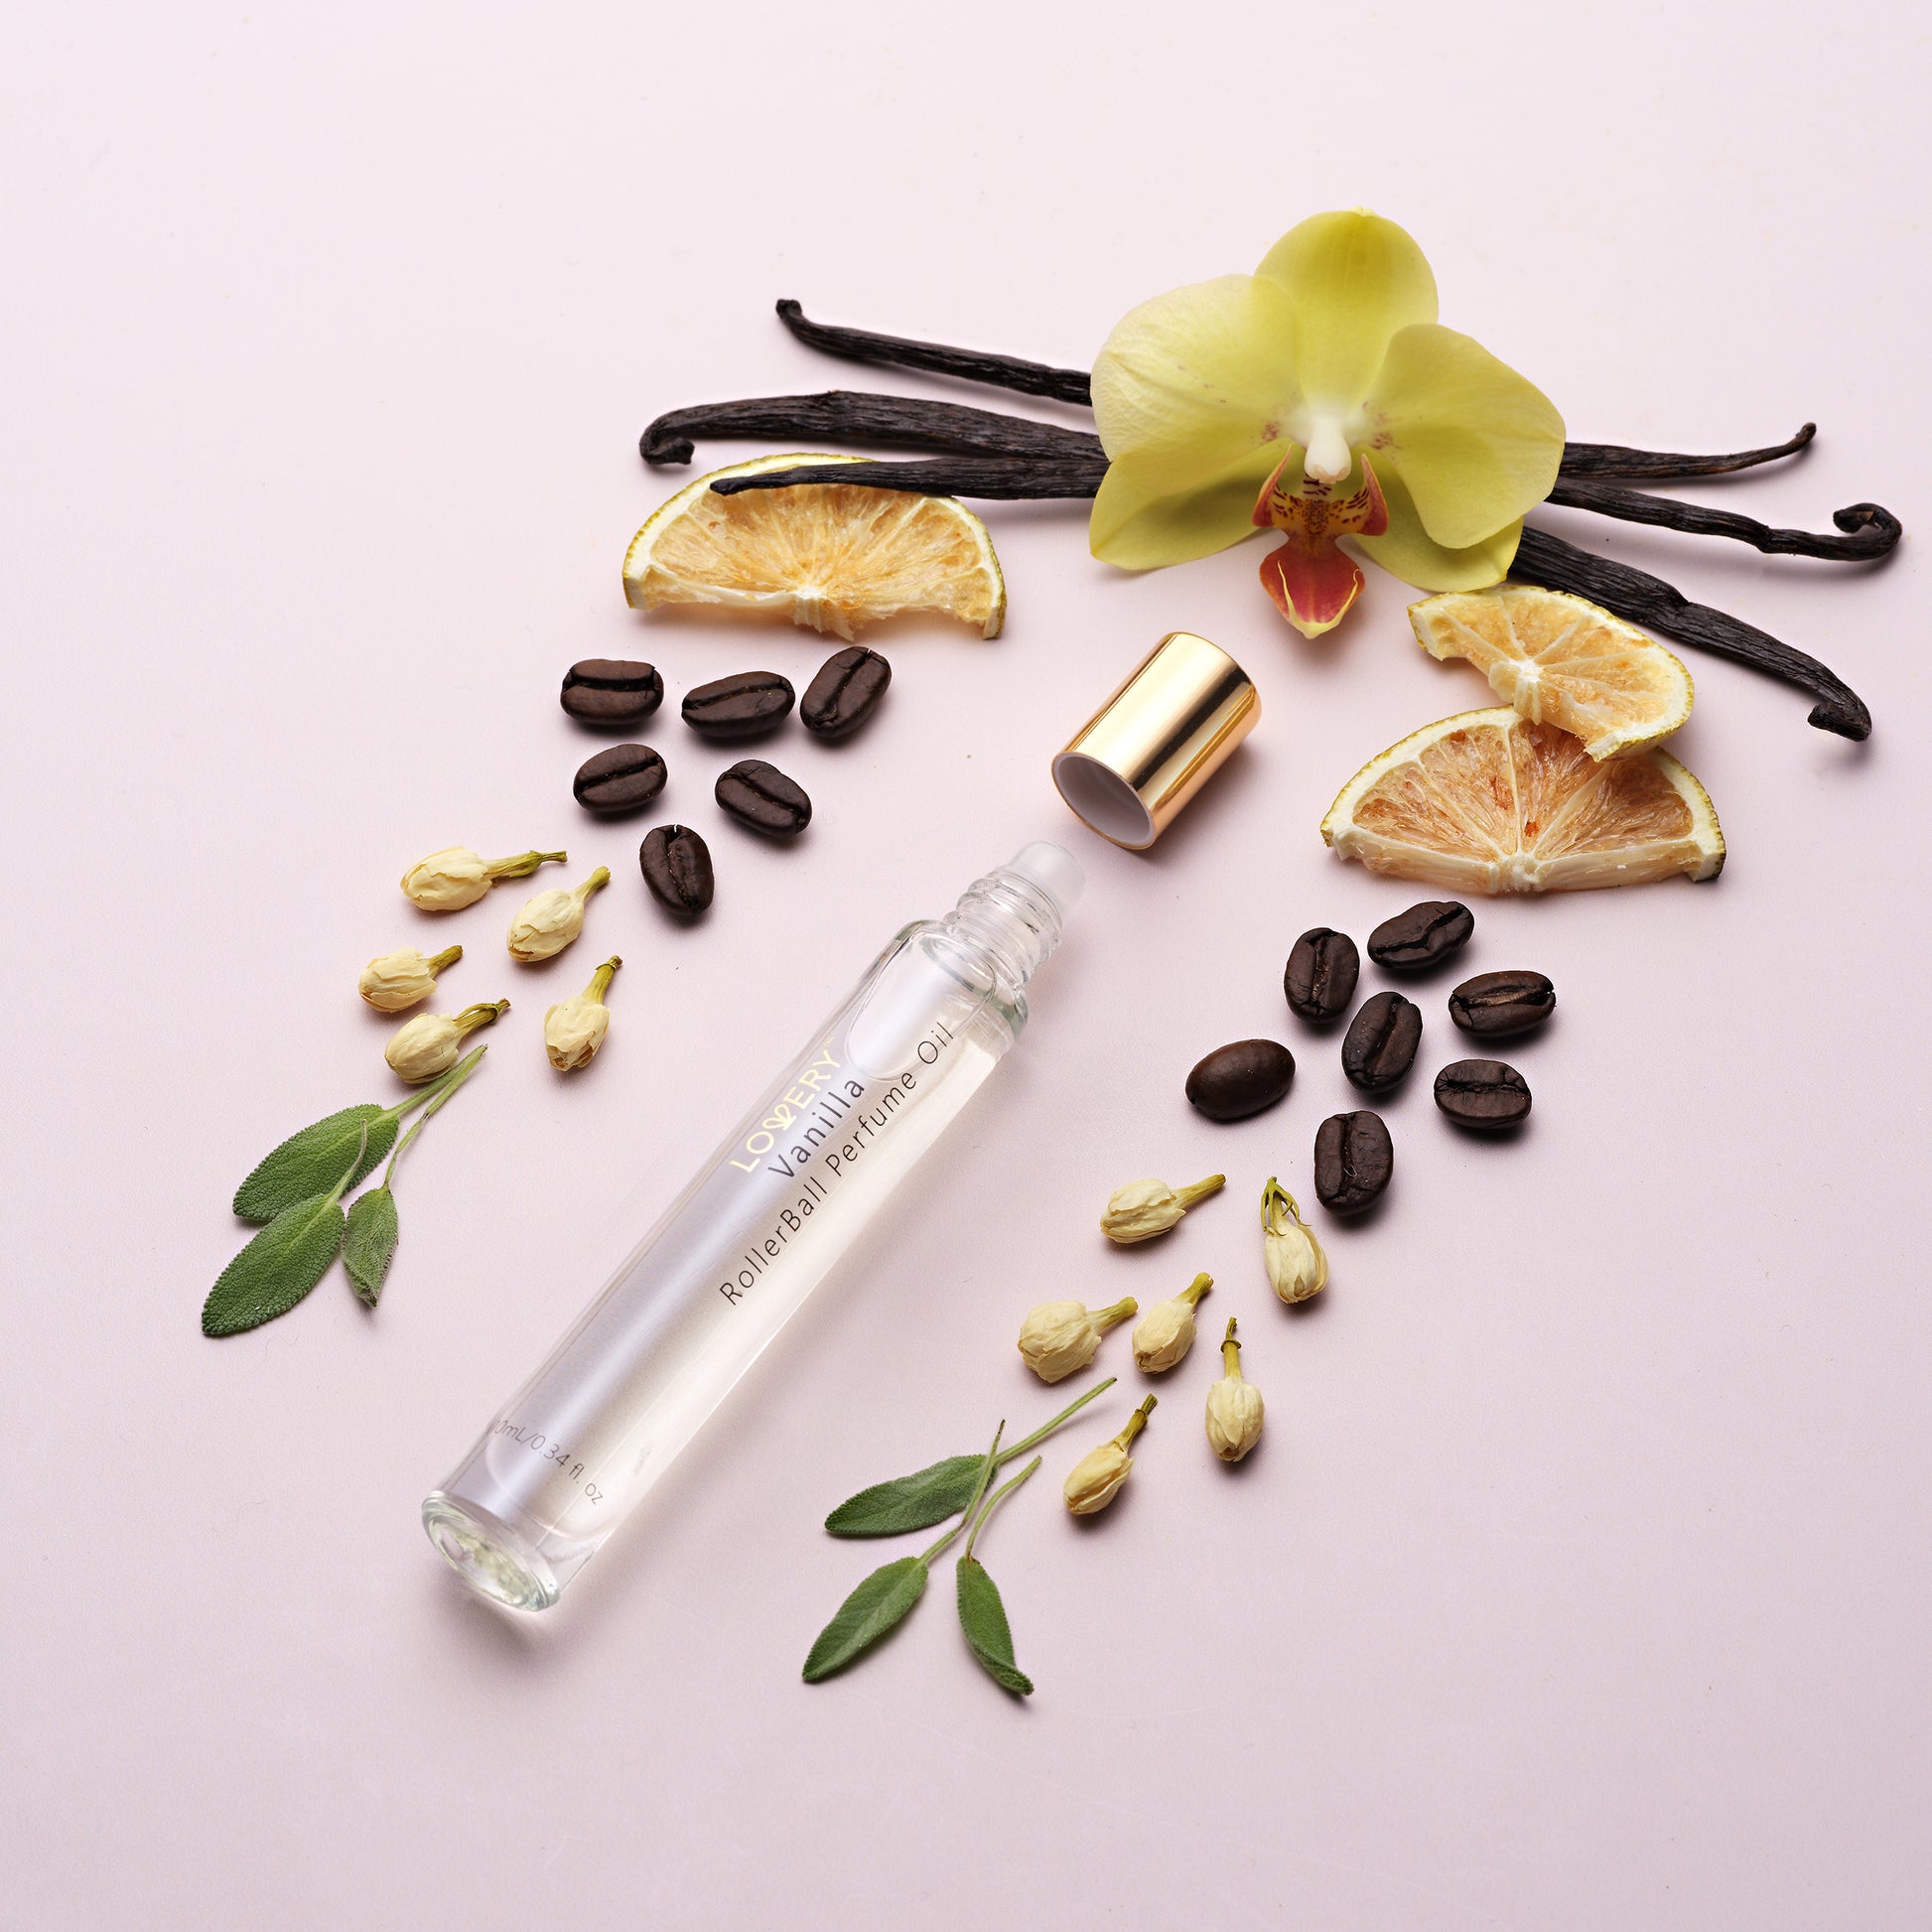 Luxury Perfume Oils  Vanilla perfume, Perfume oils, Aromas